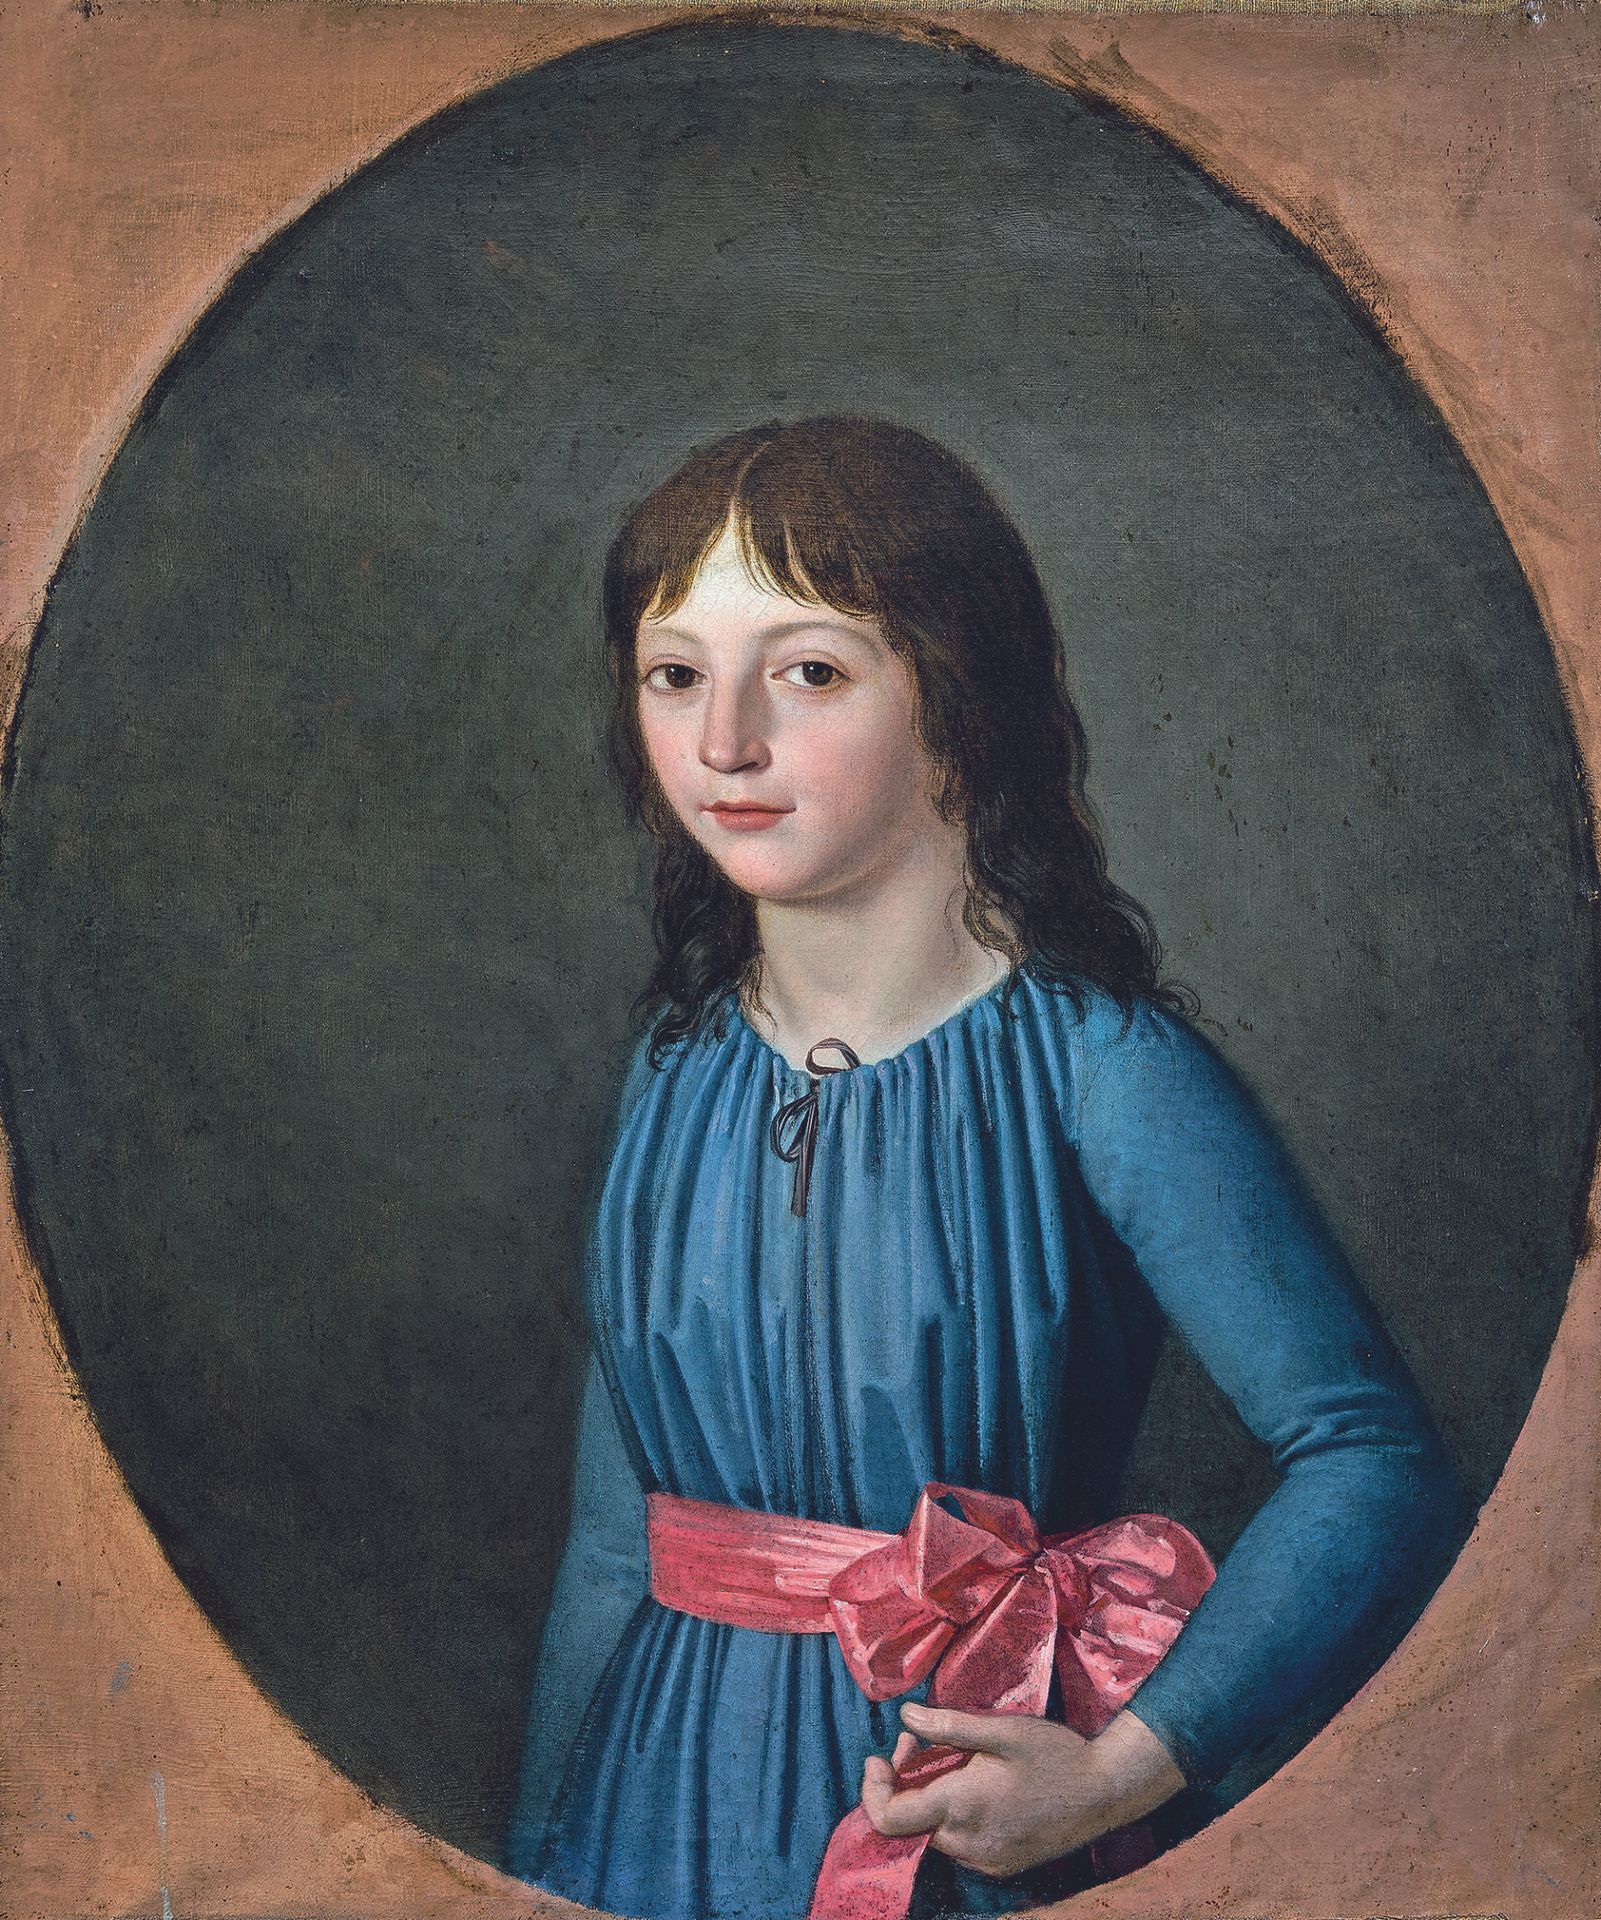 Null 19世纪初的法国经济学家
穿着粉红色腰带的四分之三胸围的年轻女孩的肖像
布面油画。
(修复)。
75.5 x 63.5 厘米